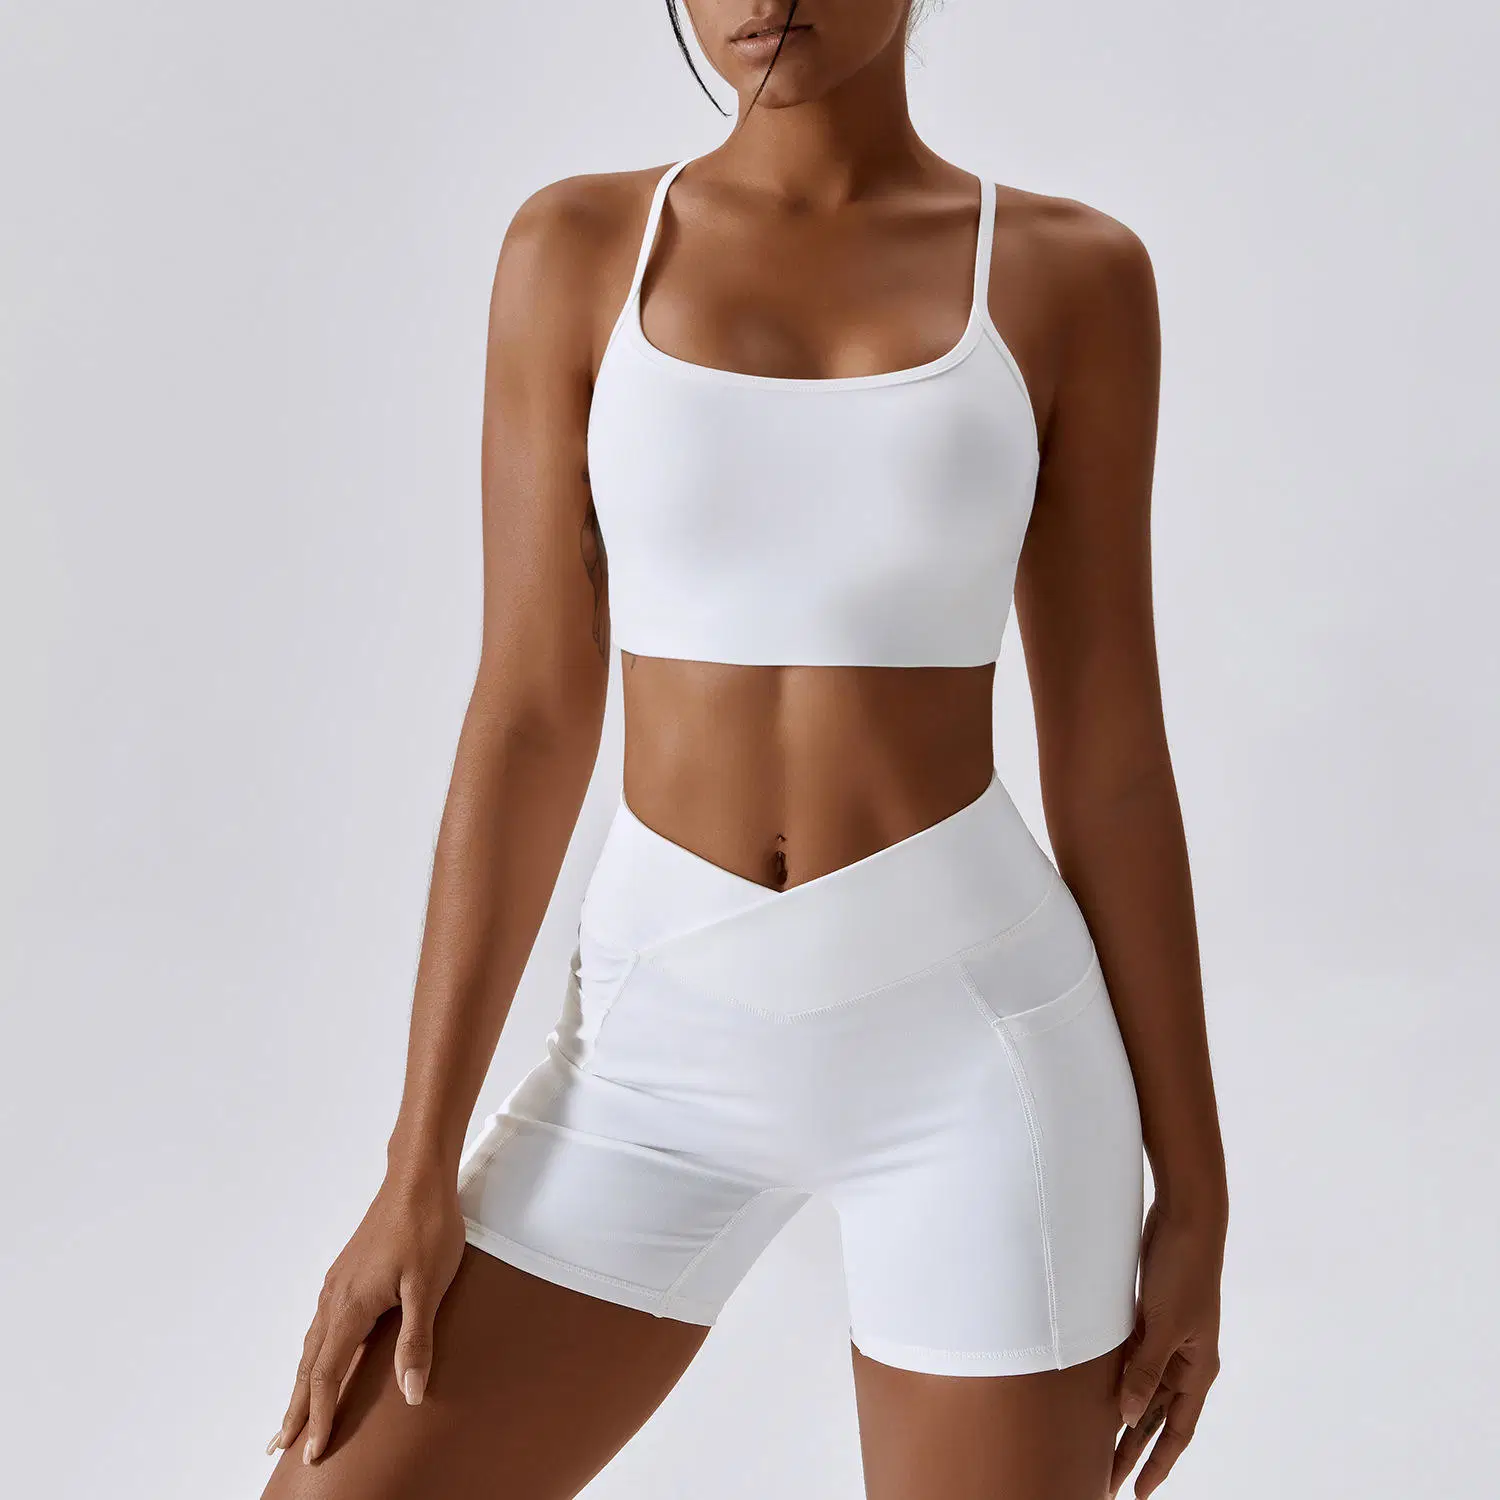 Minghang Garment Sportswear Manufacturer Women Compression Soft Lightweight V Cut Scrunch Back Yoga Shorts Bra Set